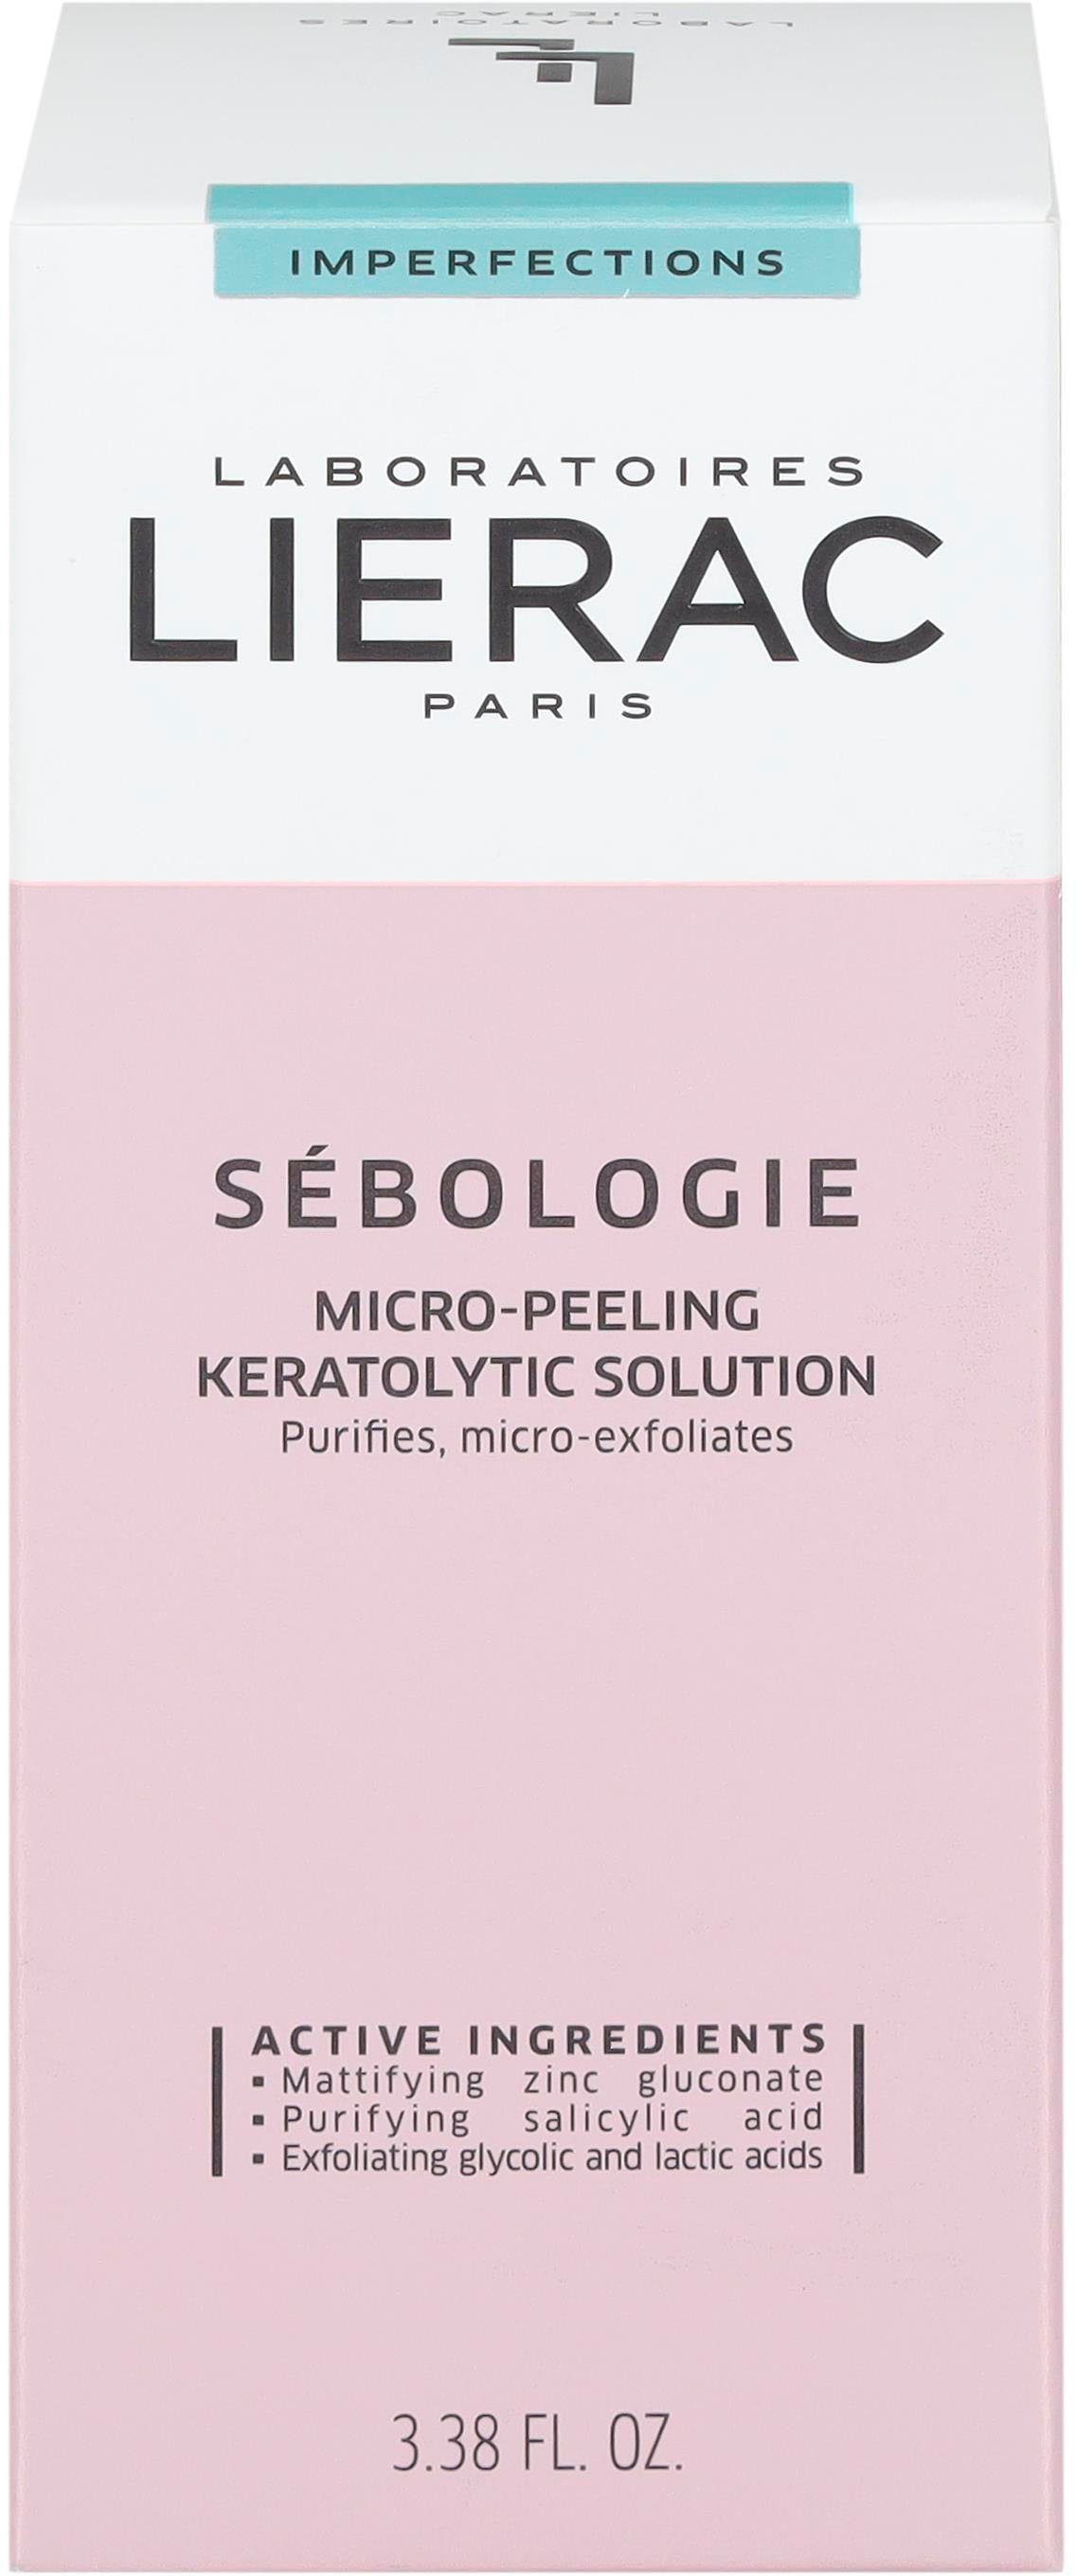 LIERAC Gesichts-Reinigungsfluid Sebologie Keratolytique Micro-Peeling Solution